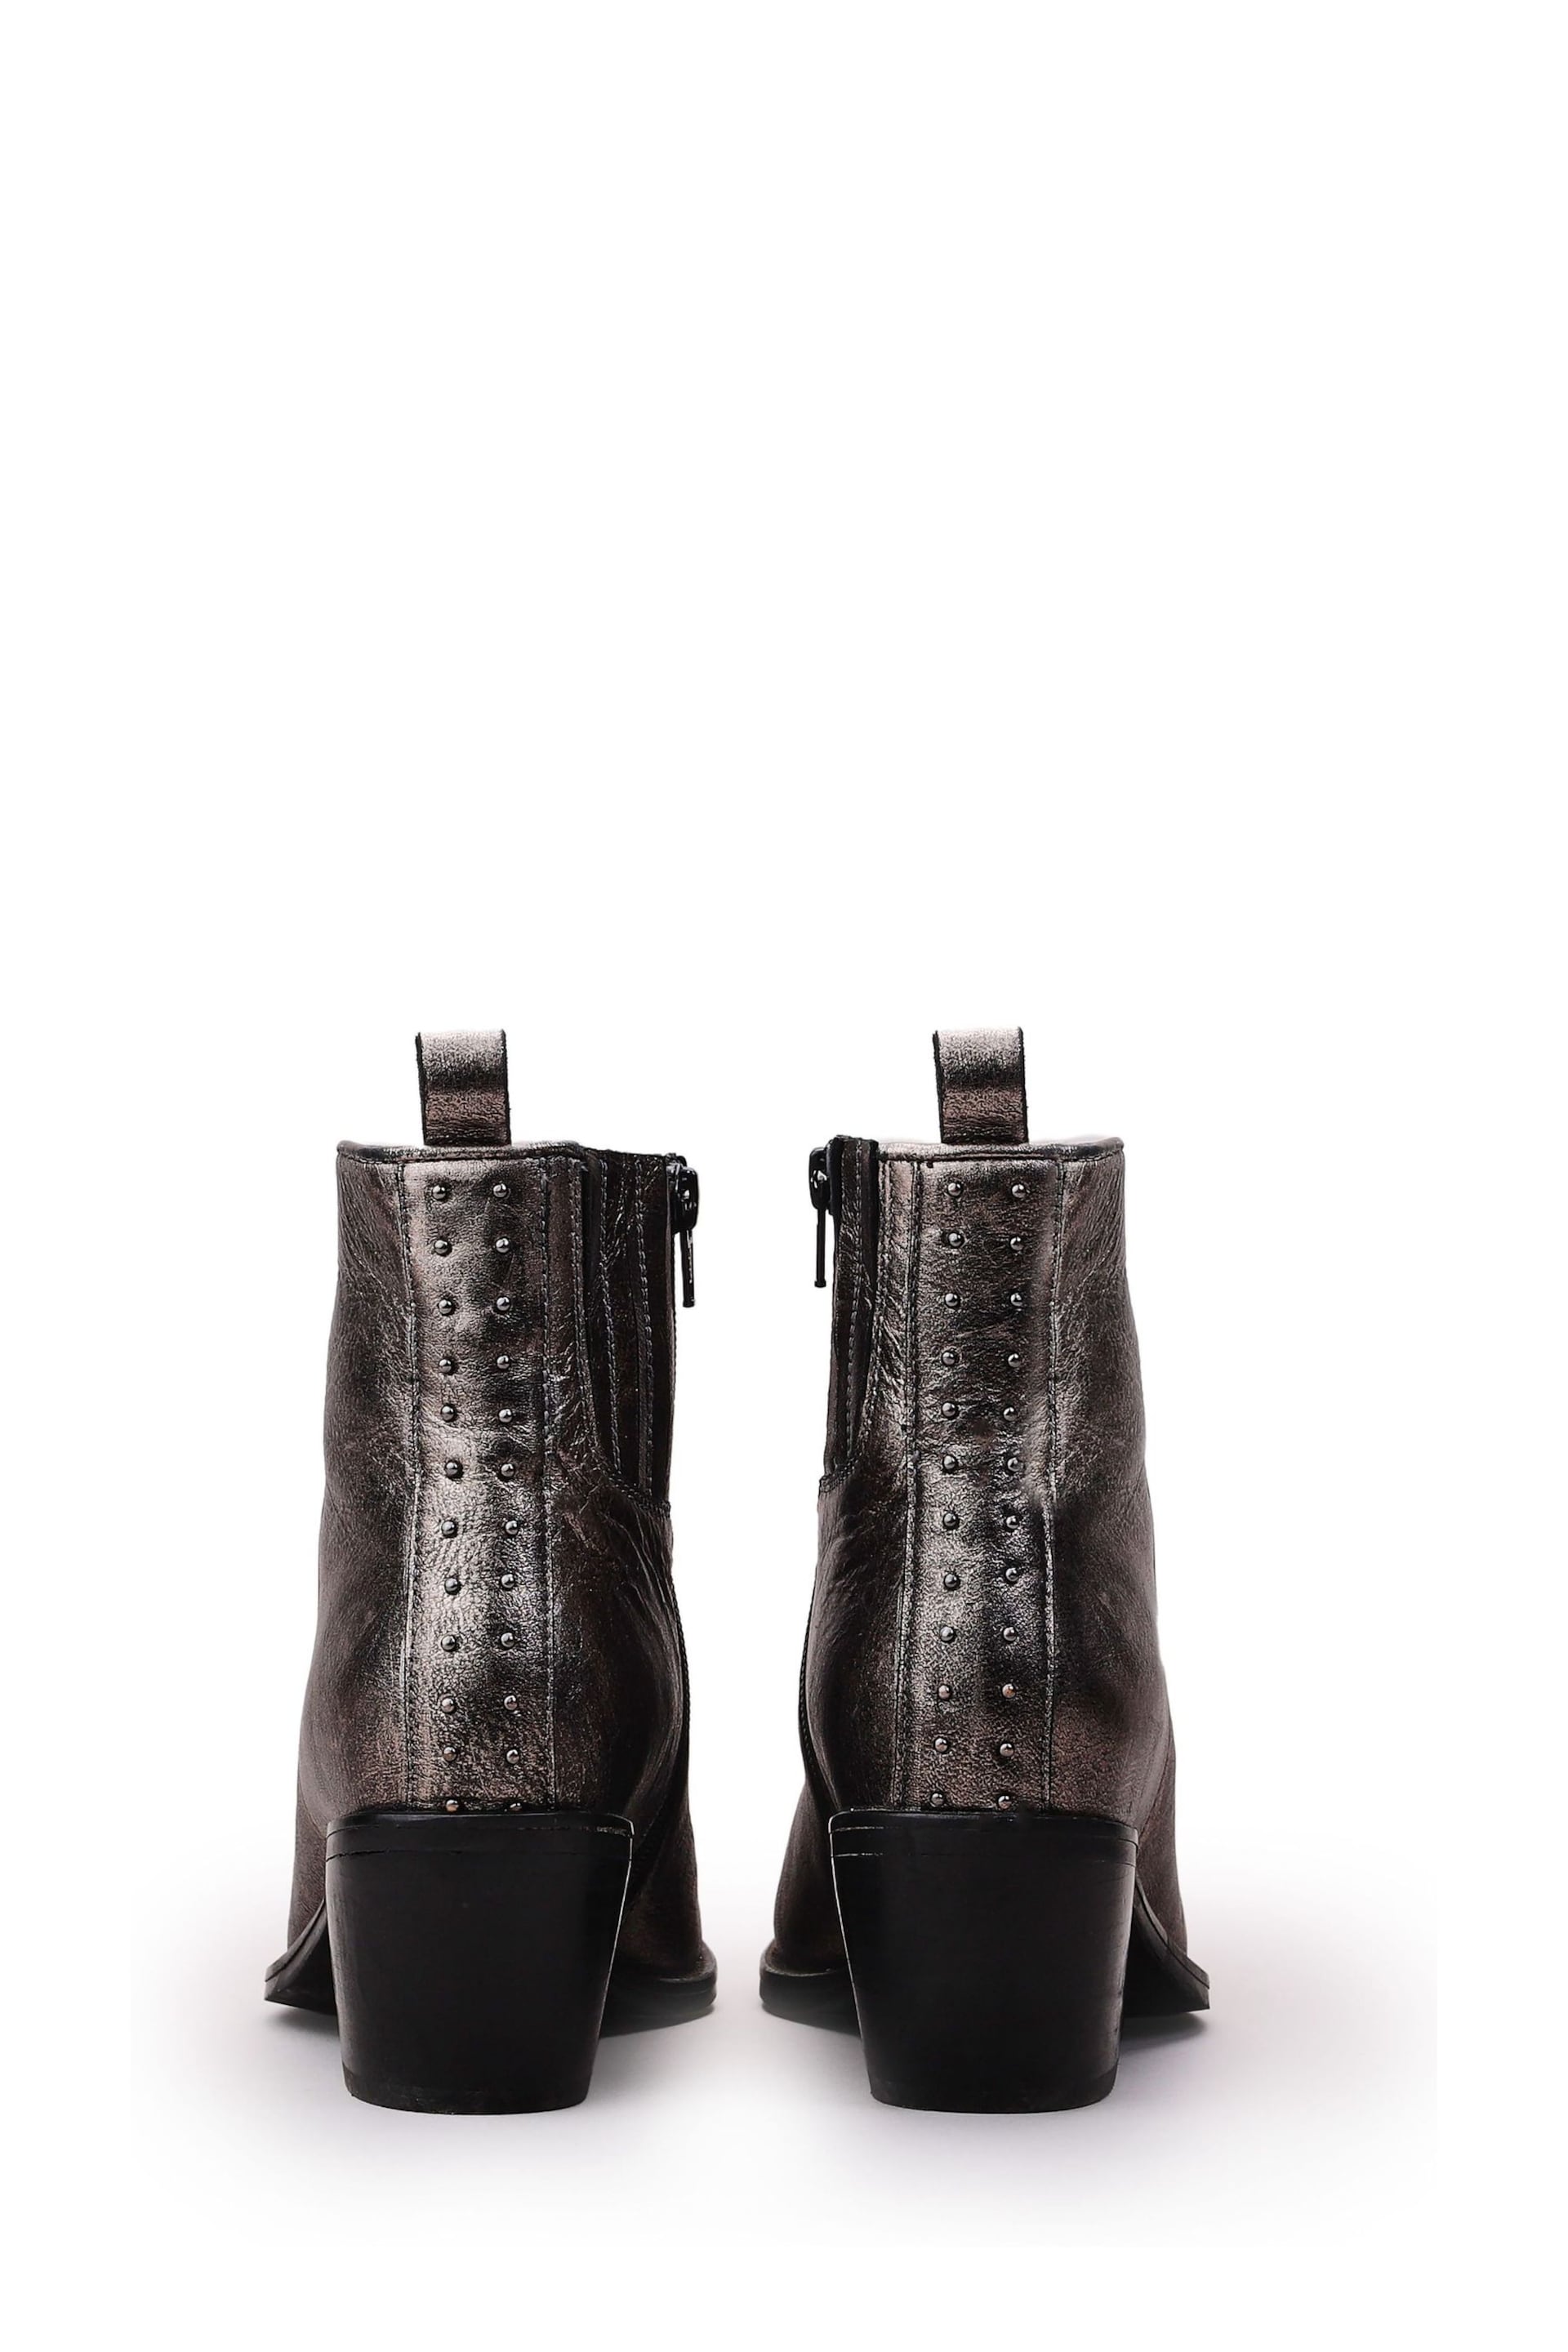 Moda In Pelle Metallic Western Boots - Image 4 of 5